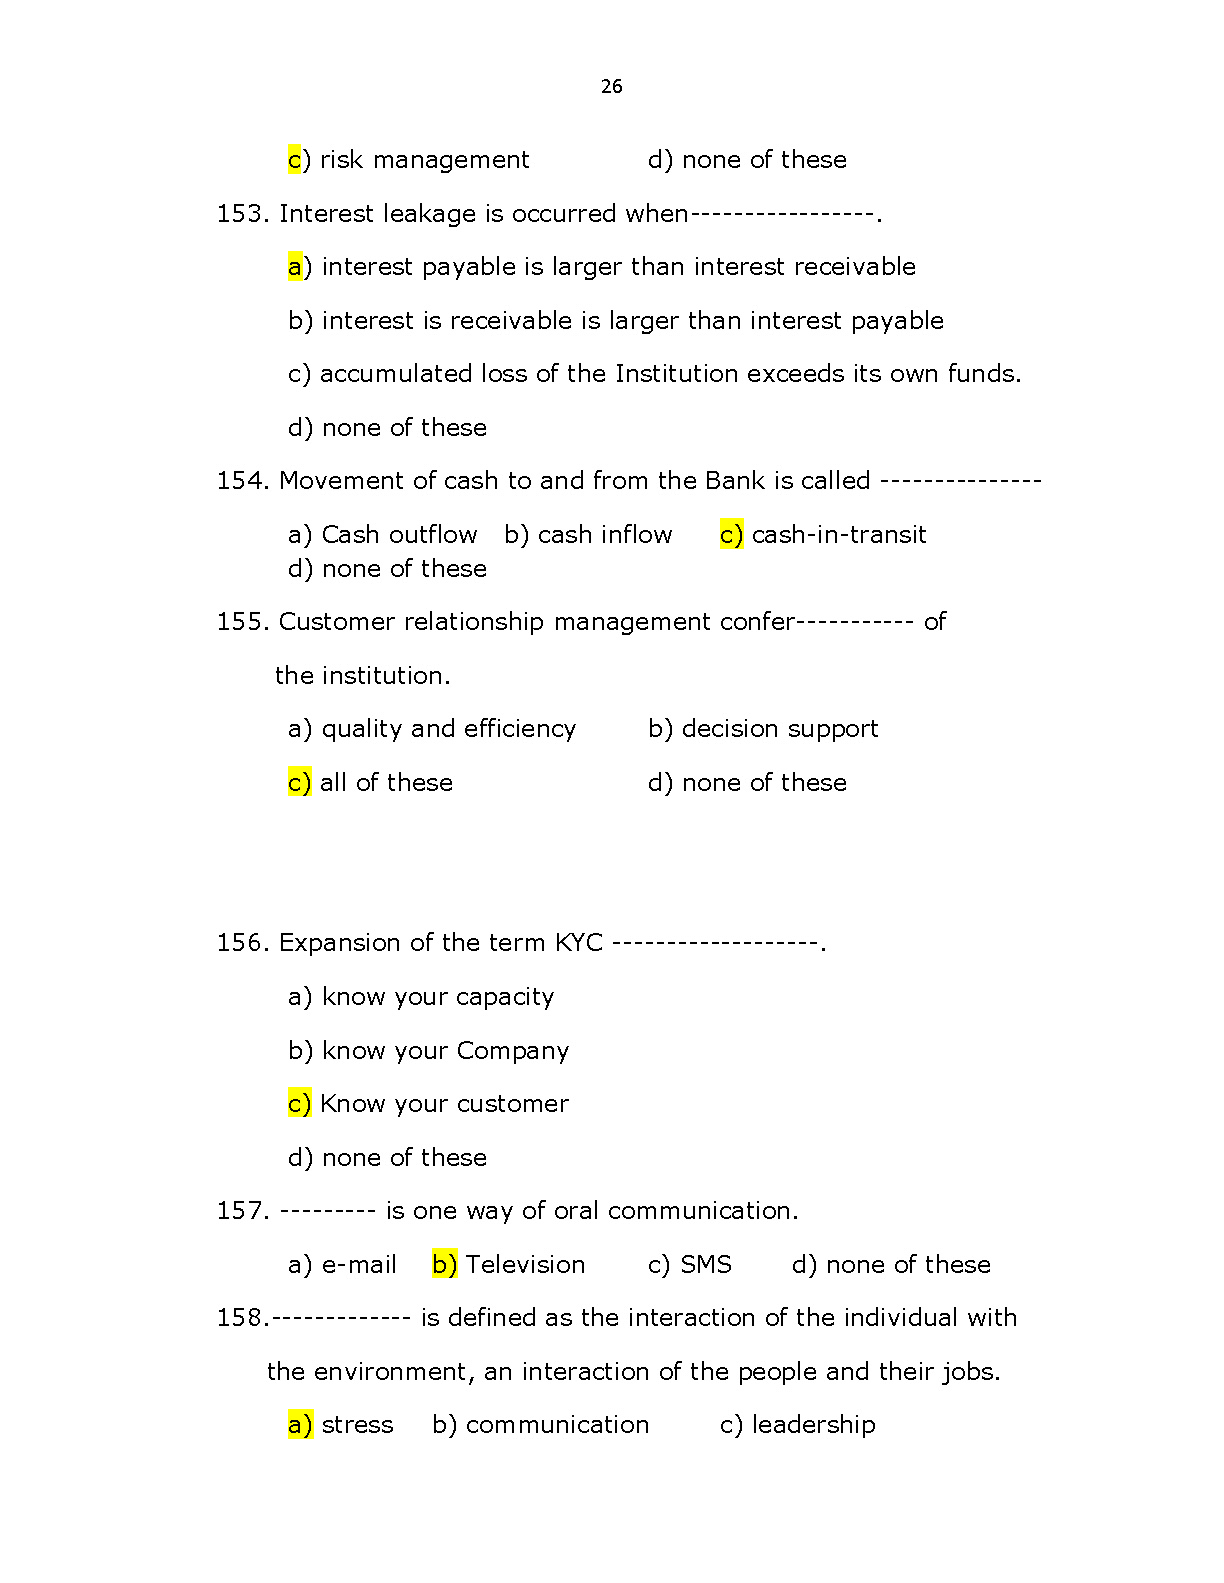 Kerala Co operative bank recruitment Sample Question Paper - Notification Image 26